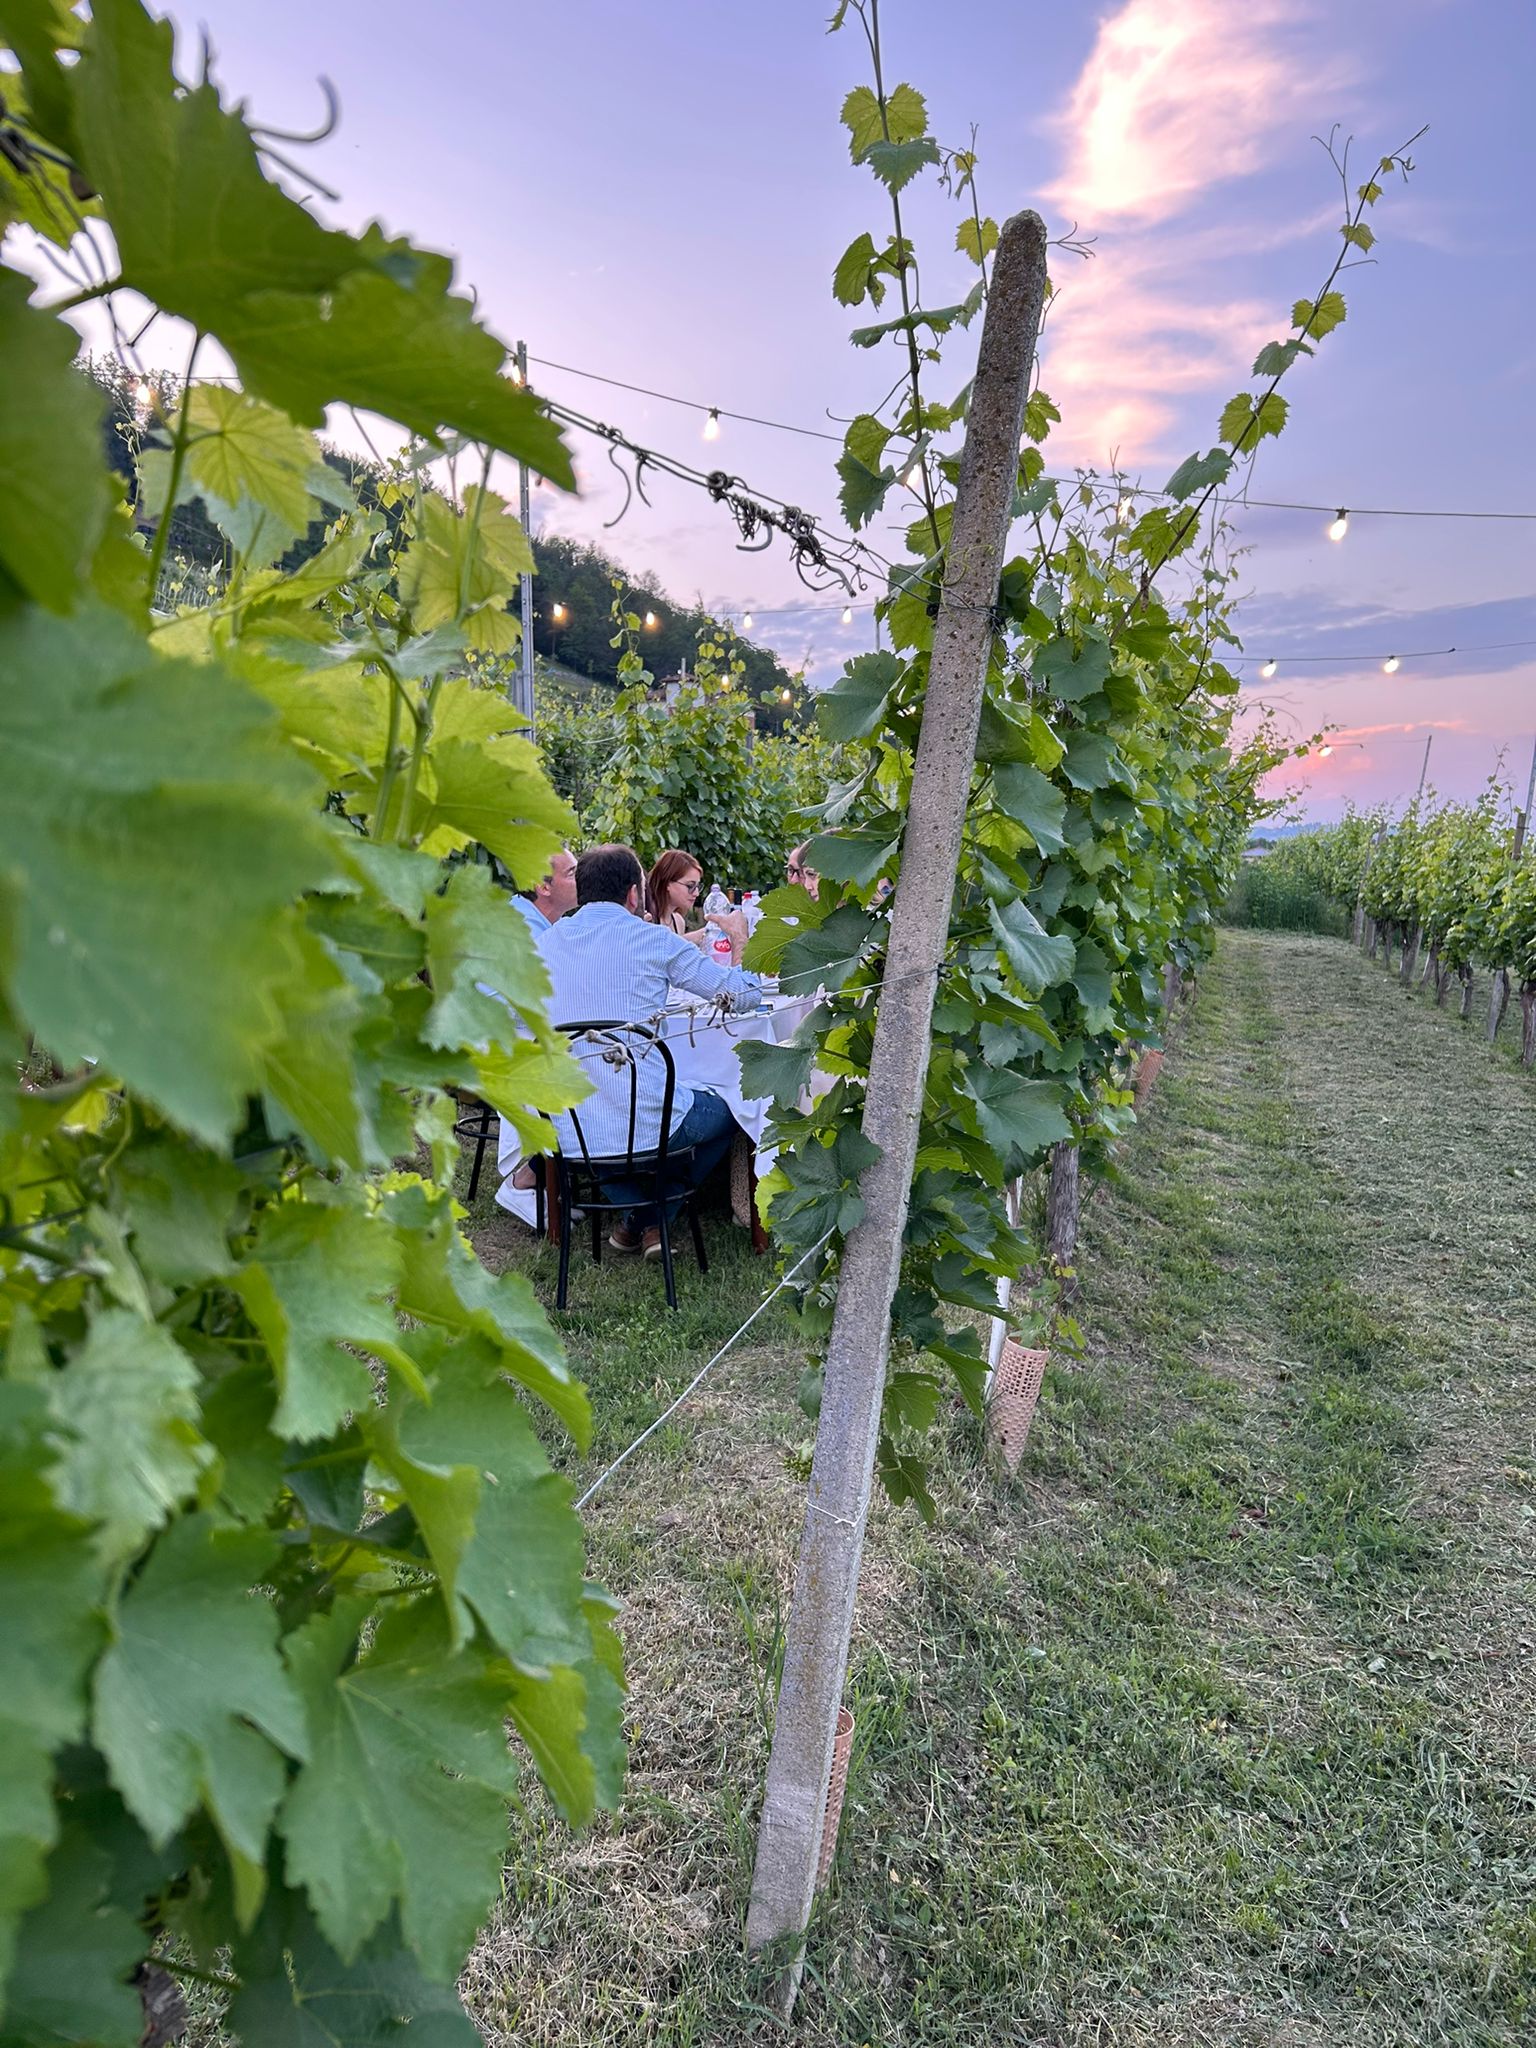 Magical vineyard dinner in the Langhe